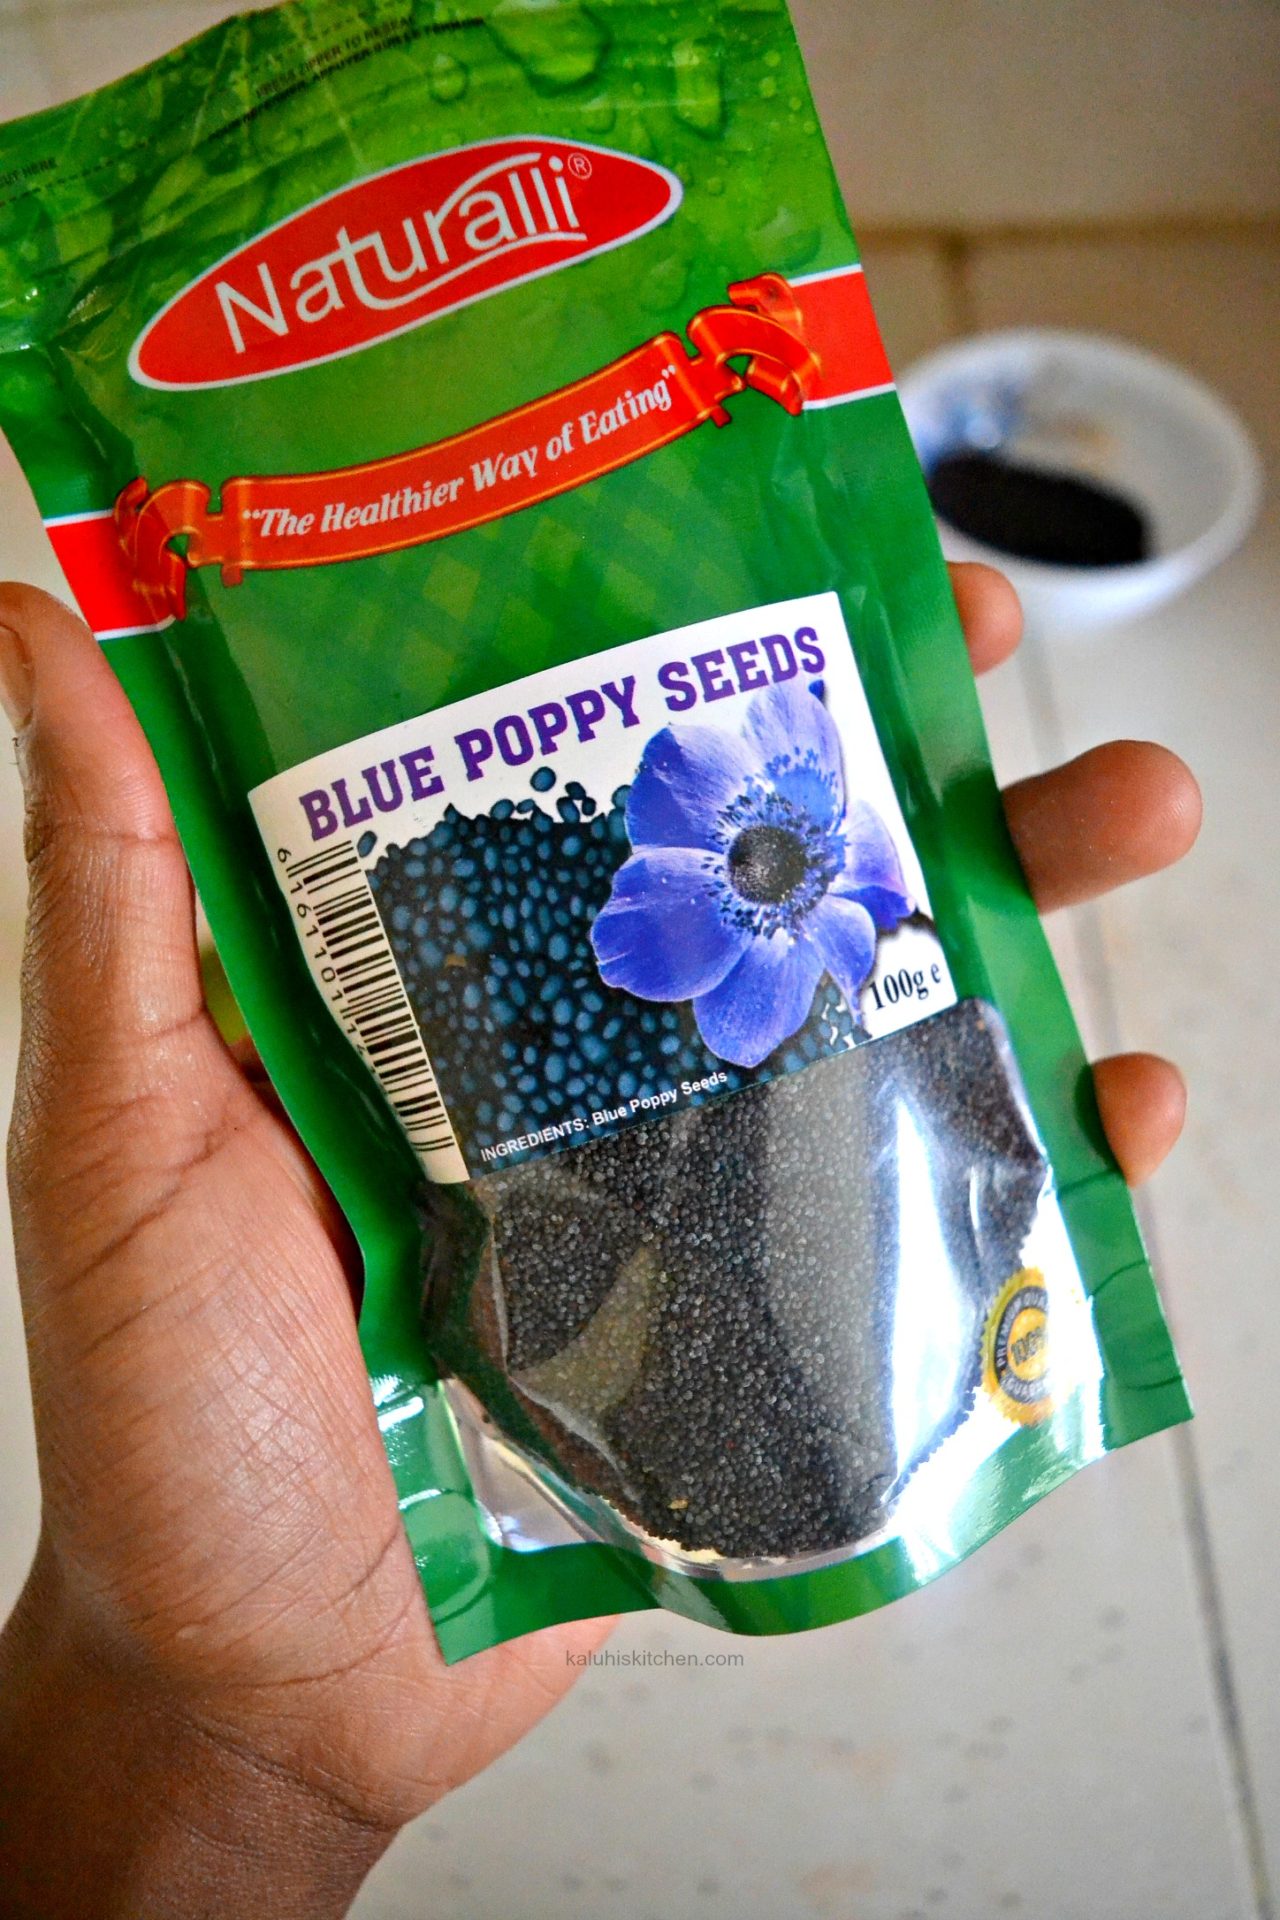 buying poppy seeds in kenya_poppy seeds in kenya_naturalli products_kaluhiskitchen.com